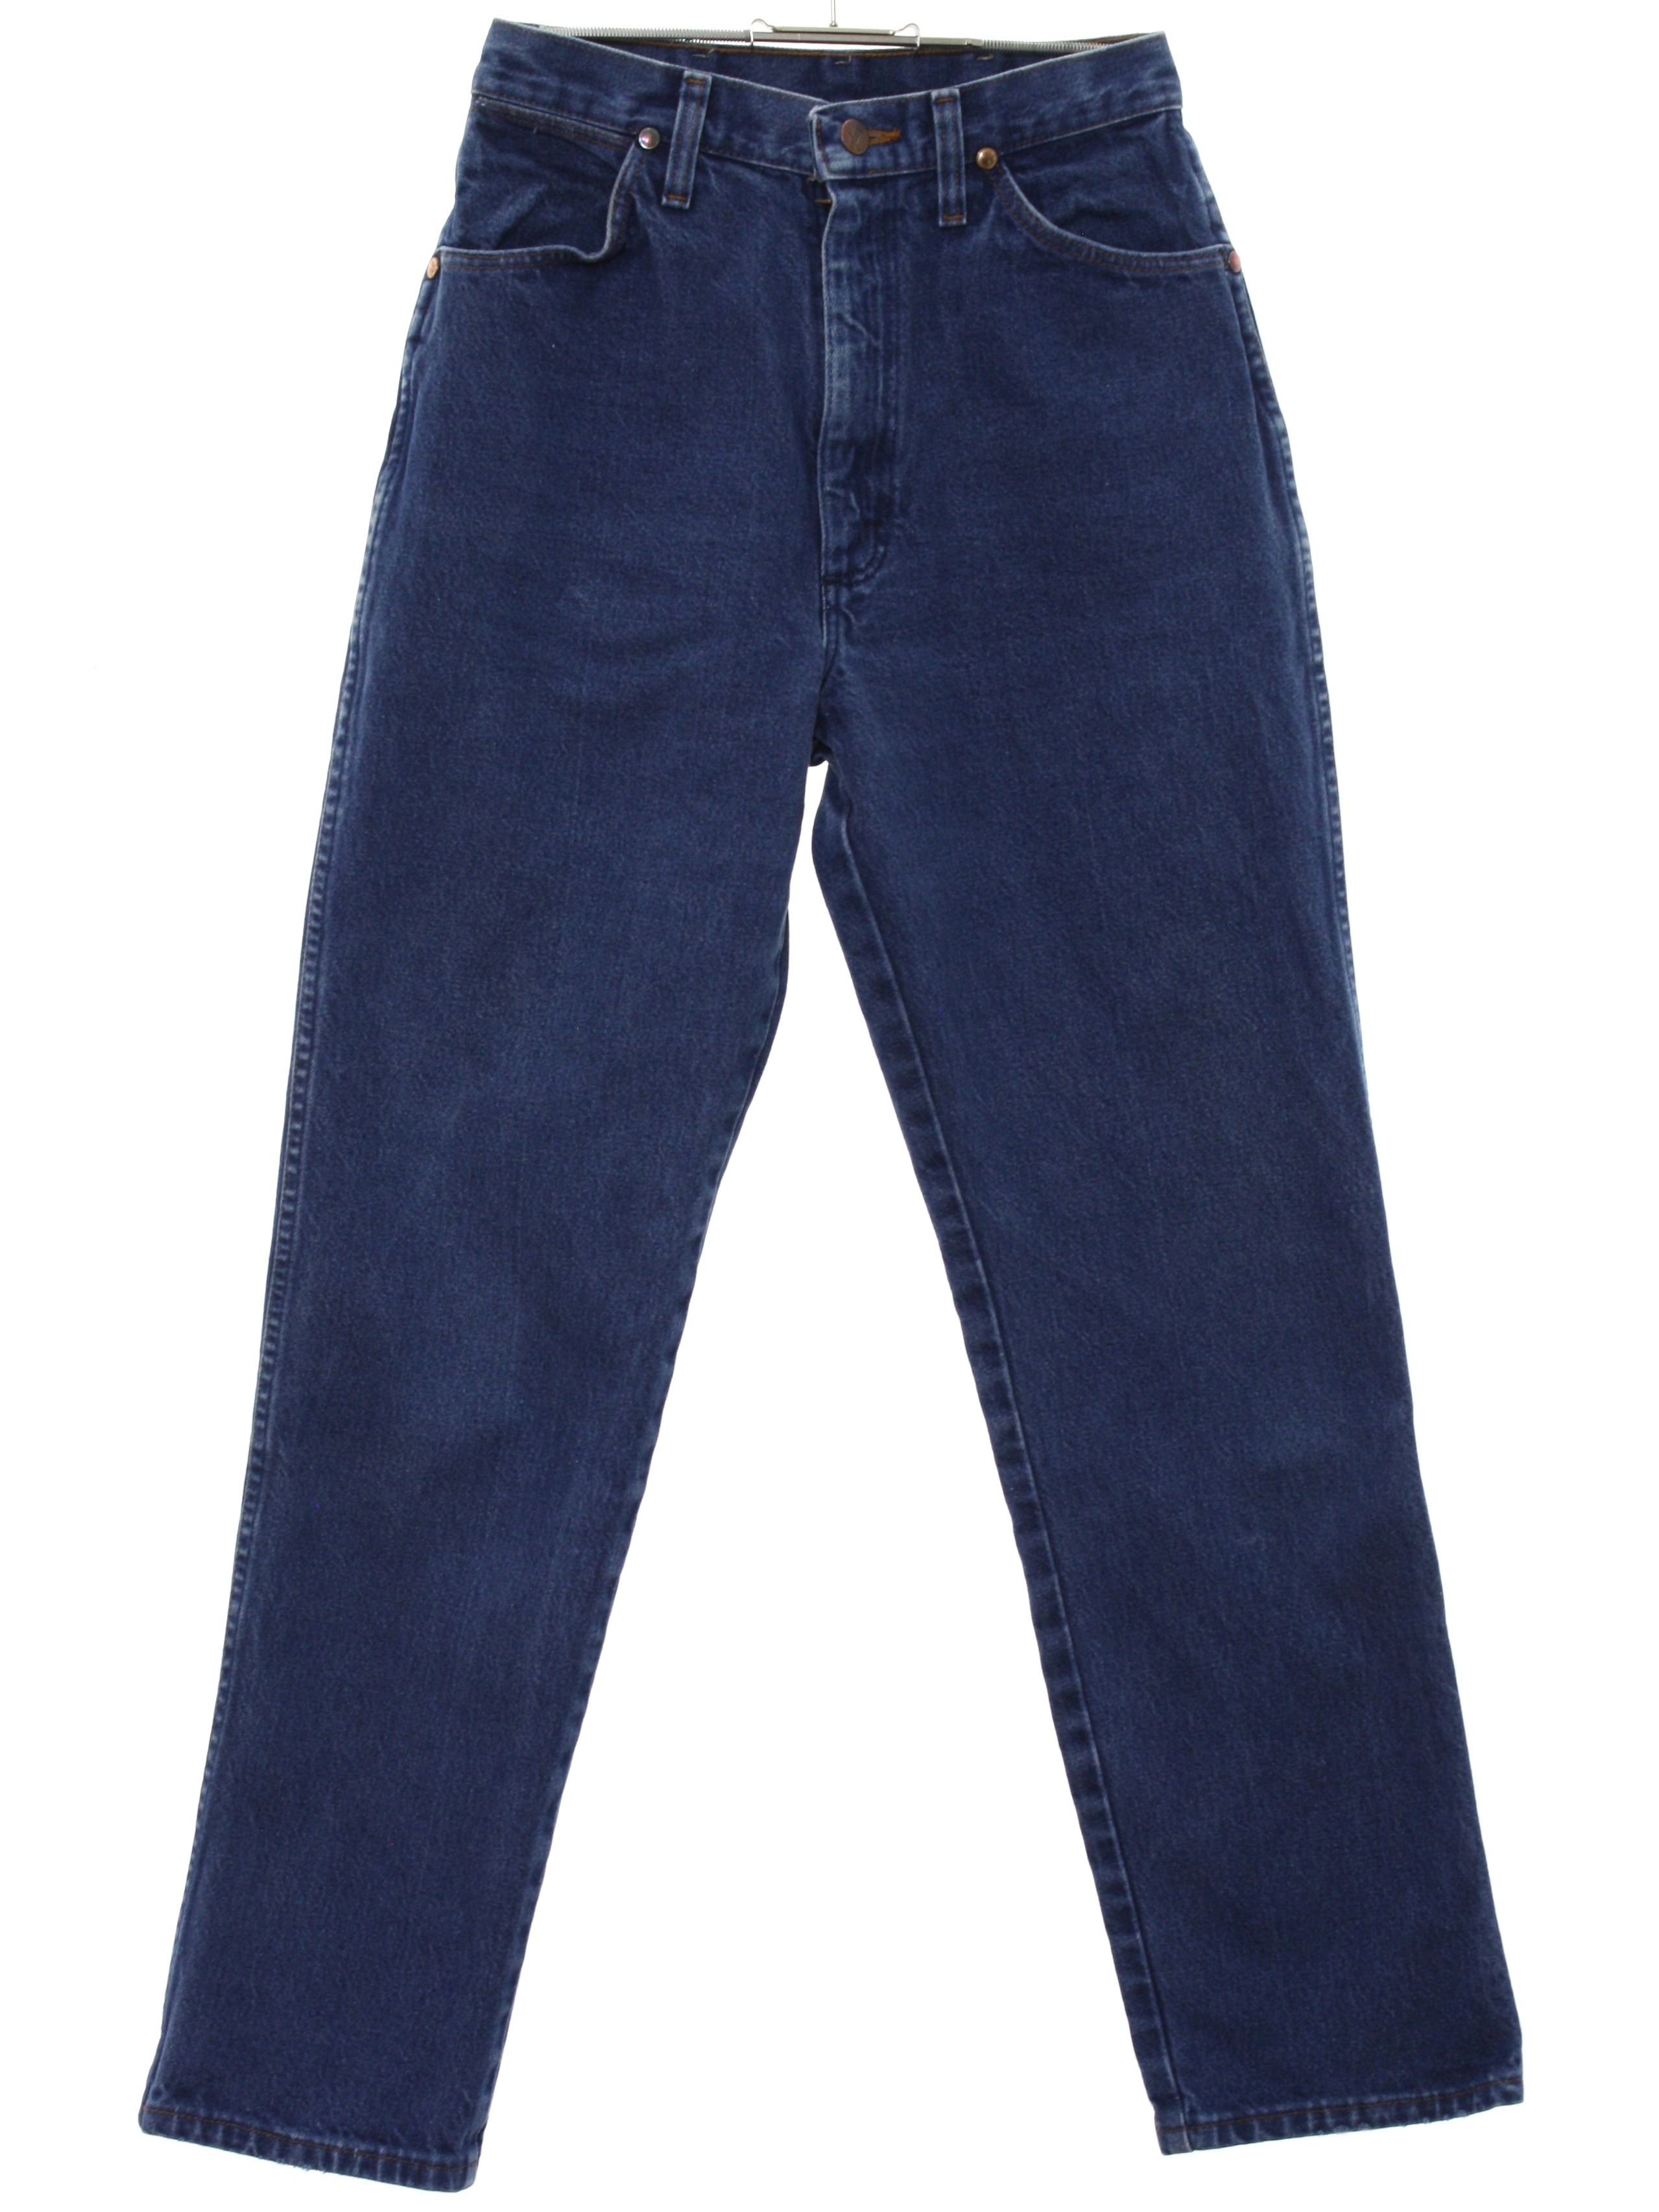 Retro Nineties Pants: 90s -Wrangler- Womens dark blue cotton denim ...